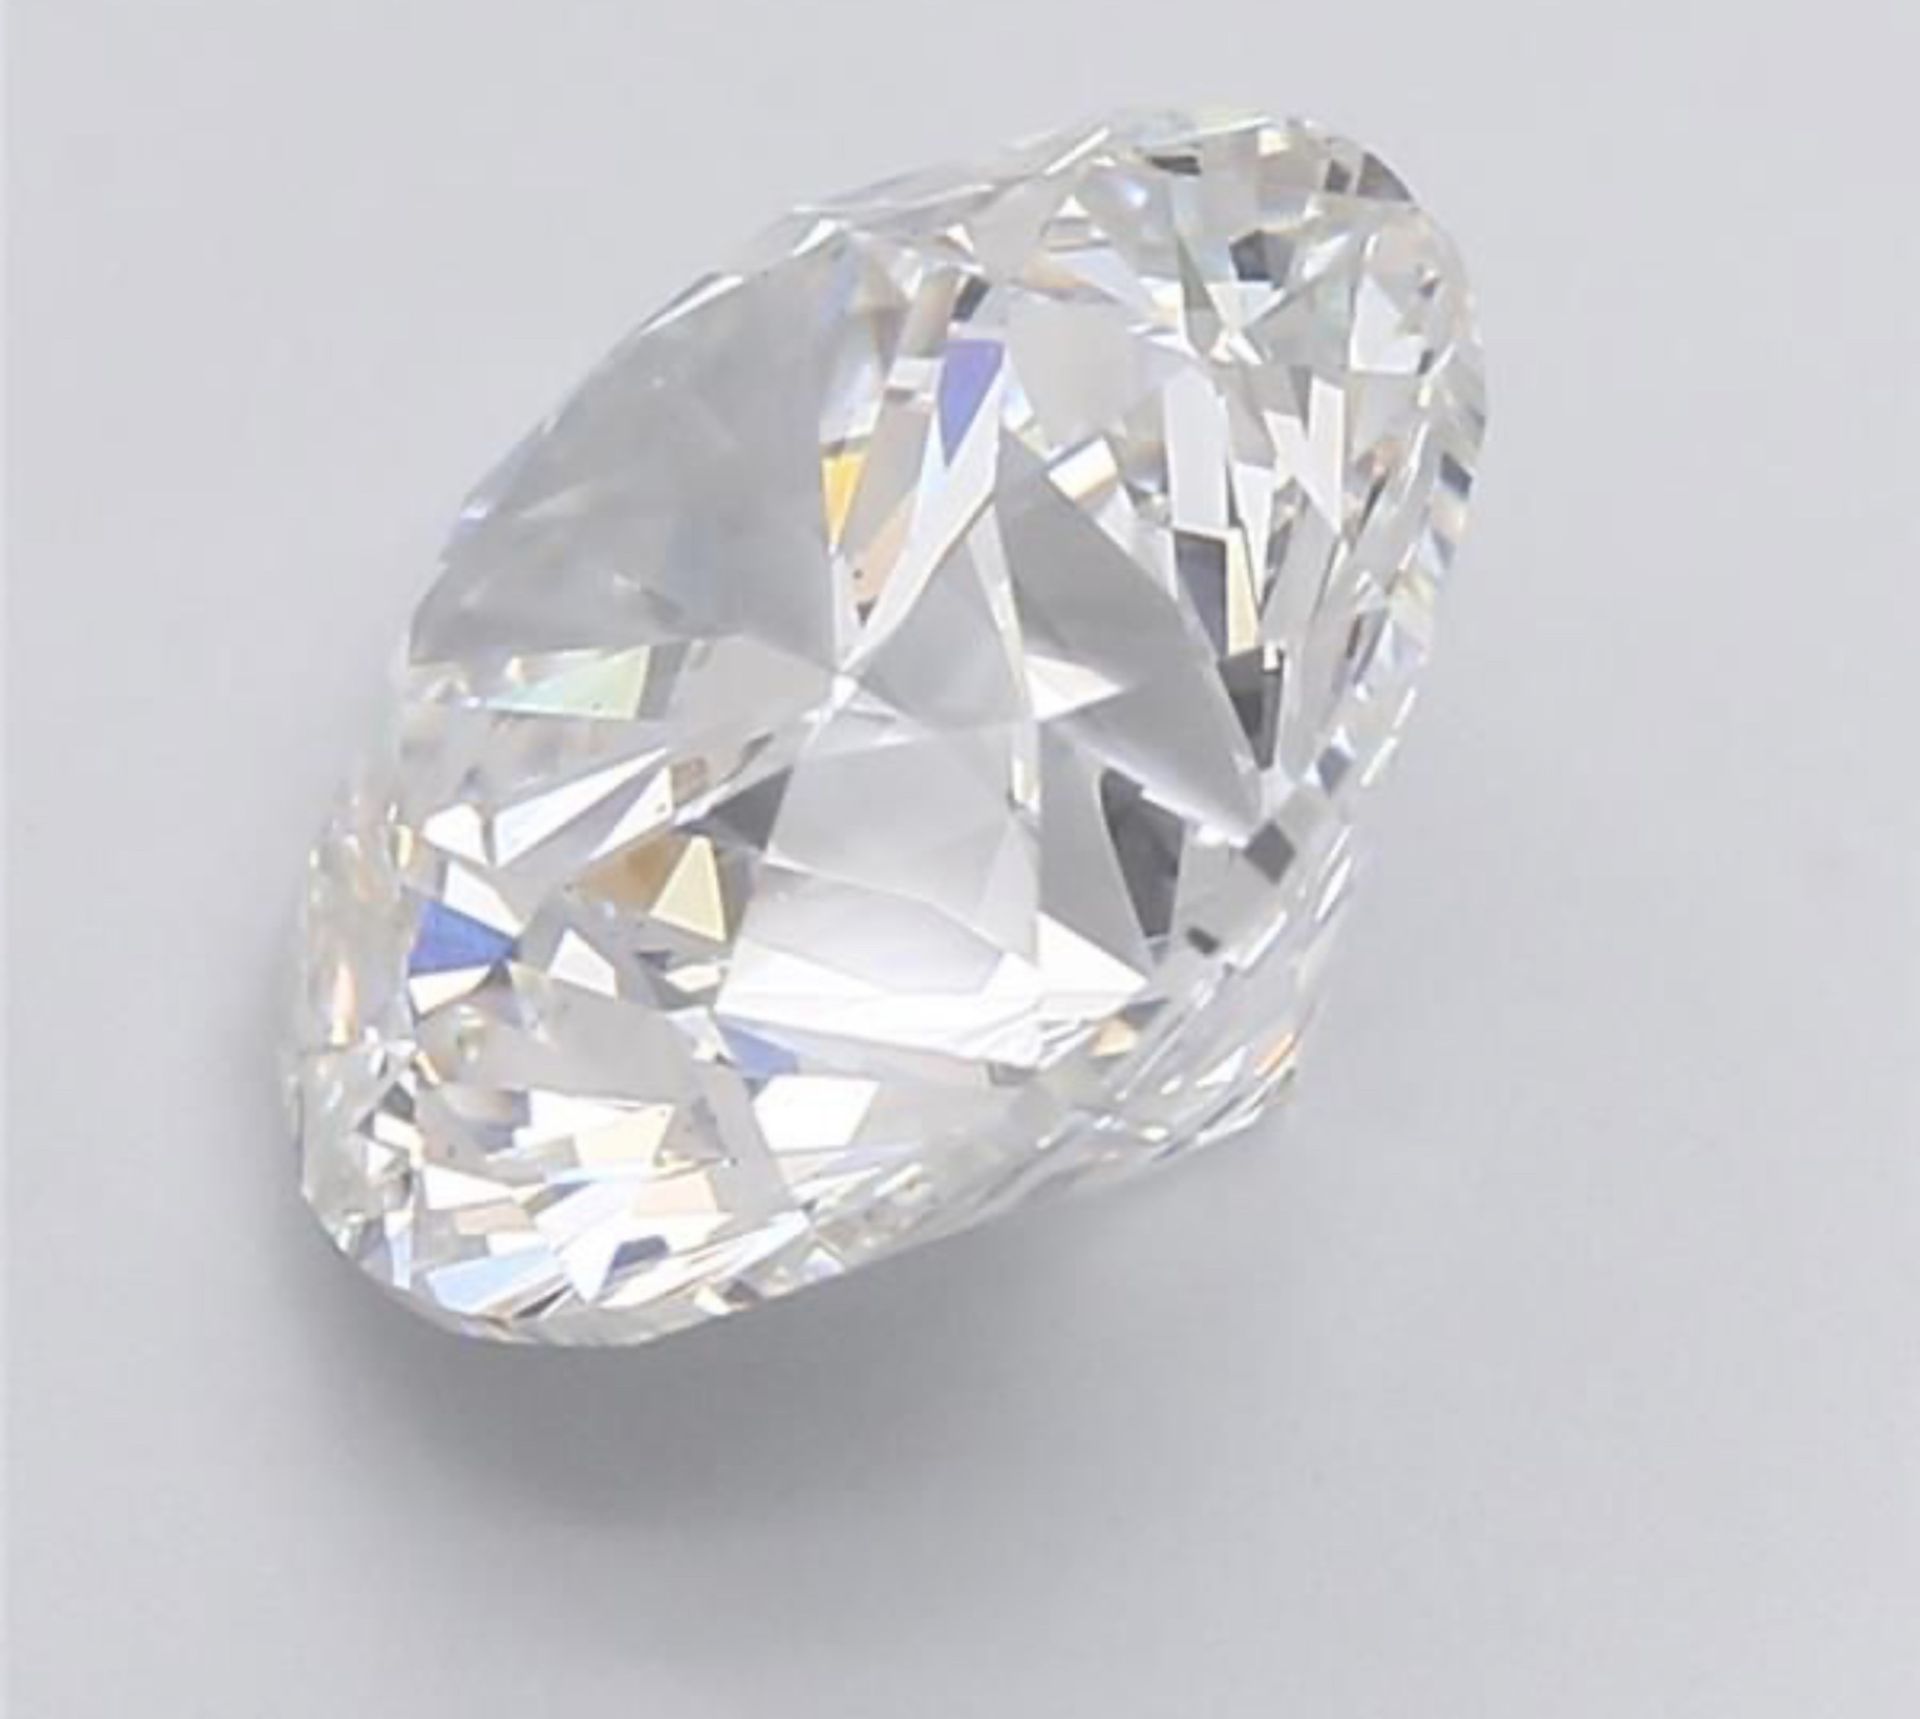 ** ON SALE ** Round Brilliant Cut Diamond 1.00 Carat D Colour VVS1 Clarity - IGI Certificate - Image 3 of 6